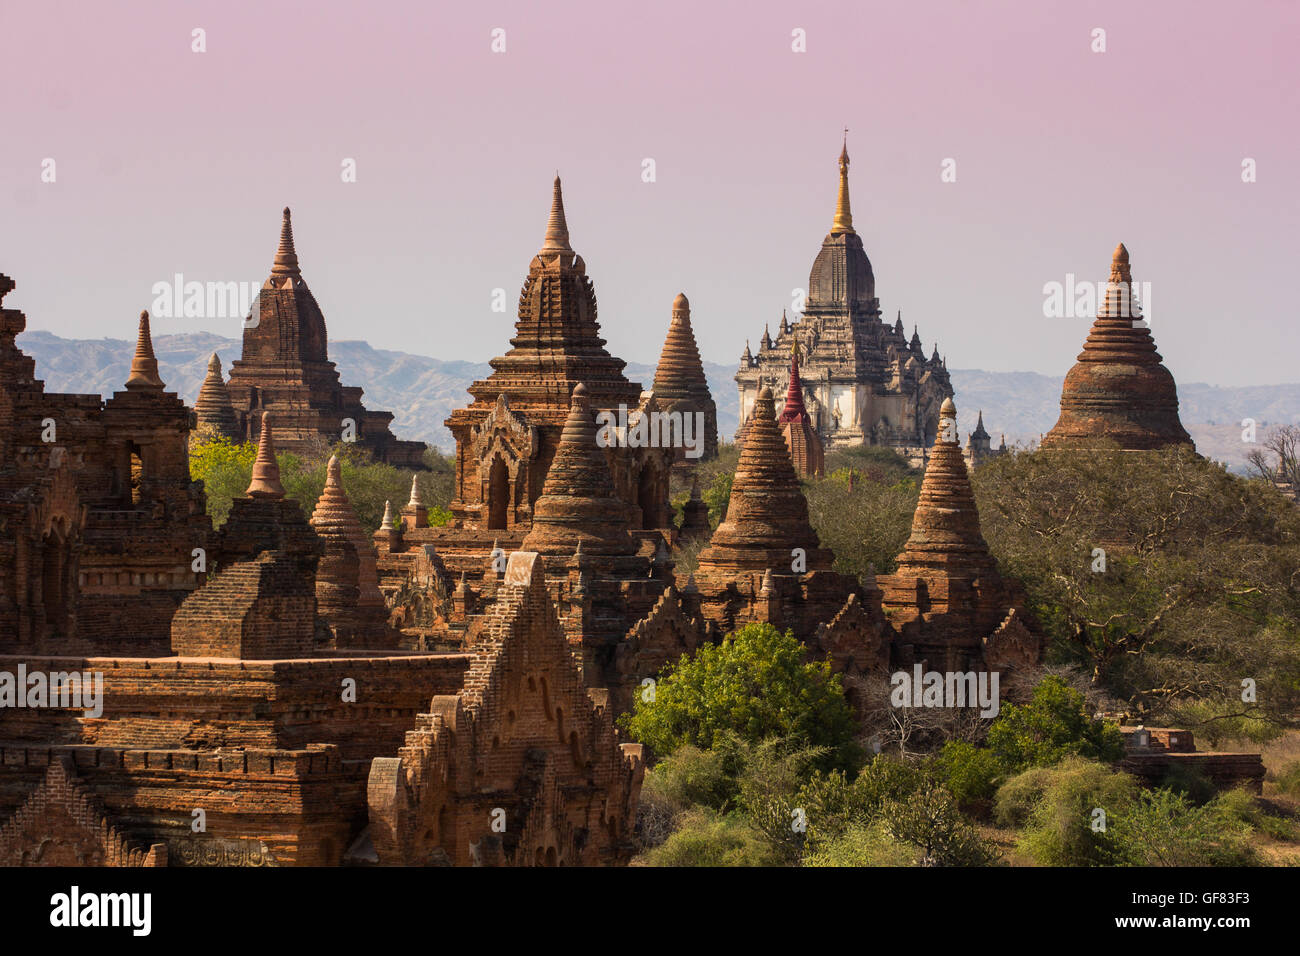 Temples in Bagan, Land of Pagoda, Myanmar Stock Photo